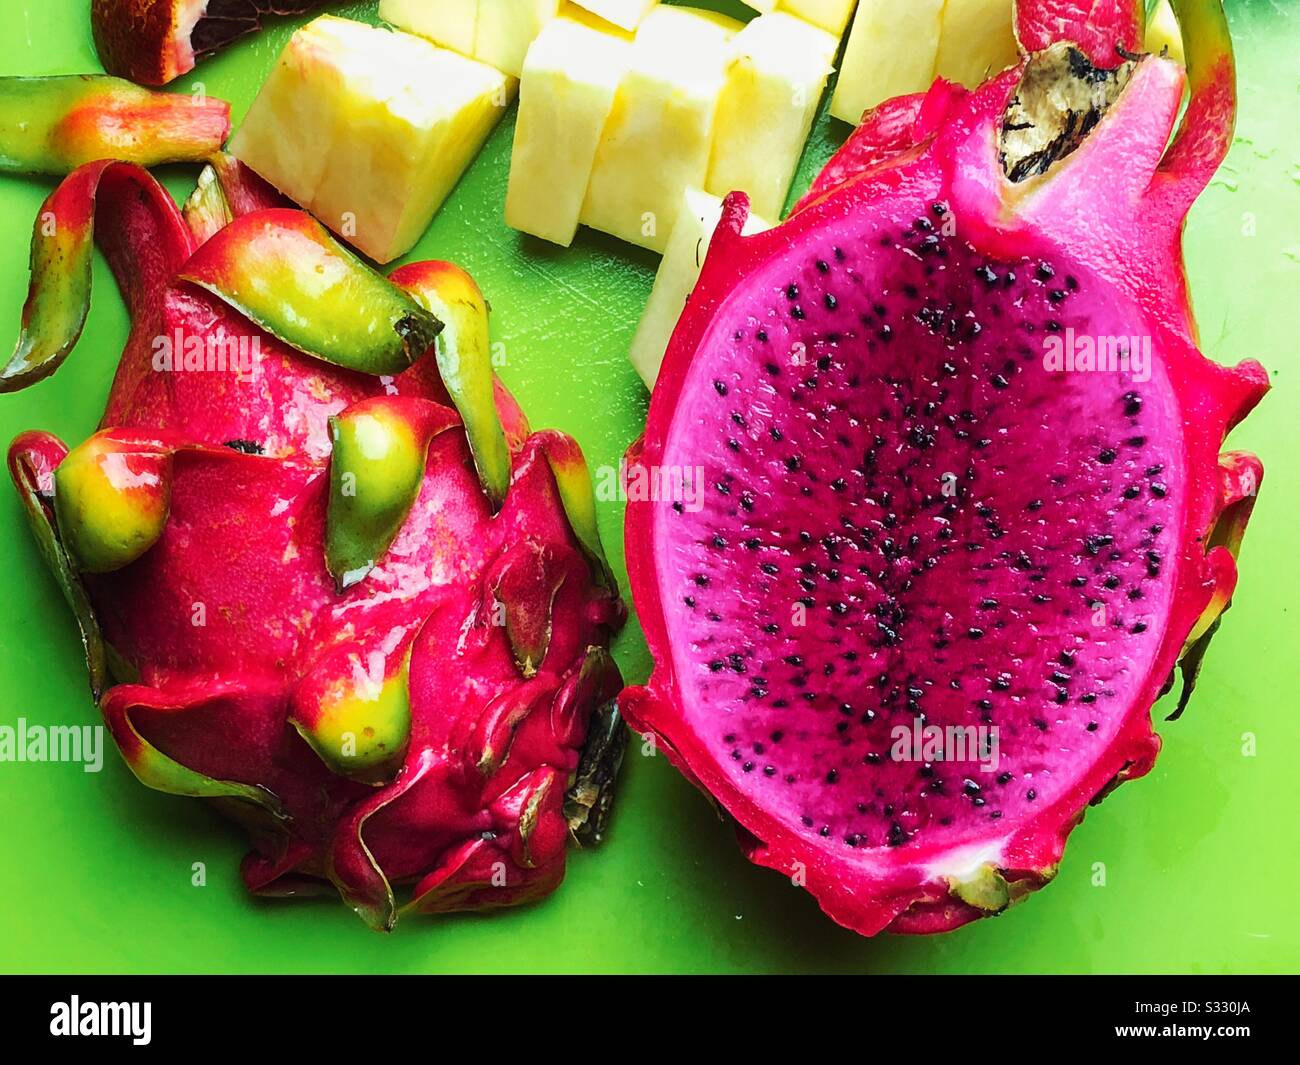 Red dragon fruit on green cutting board Stock Photo